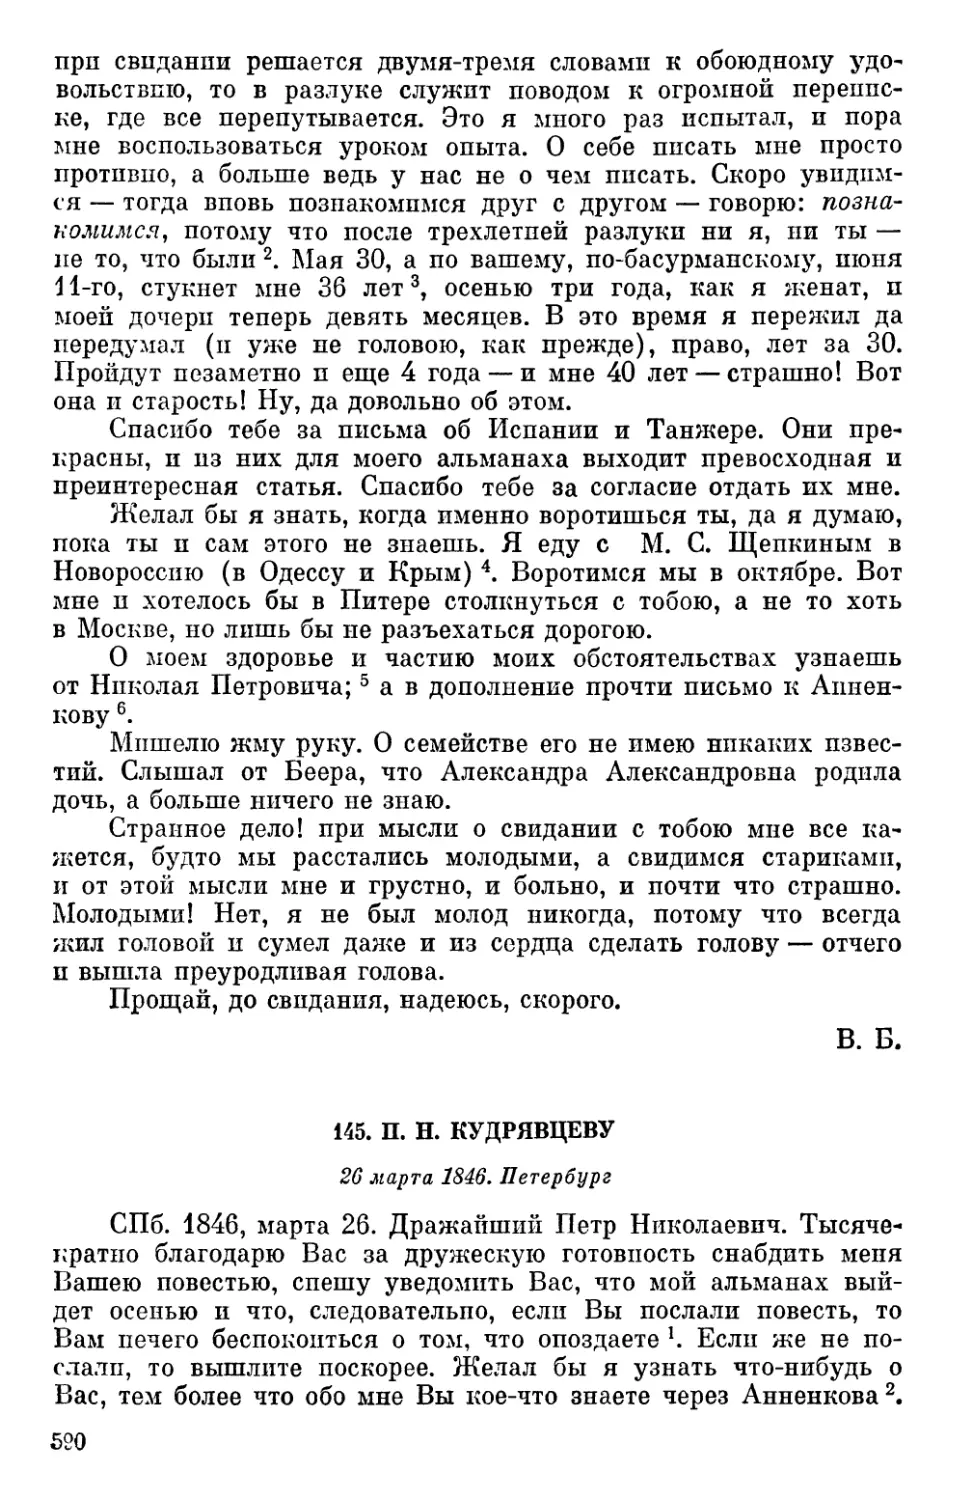 145. П. Н. Кудрявцеву. 26 марта 1846